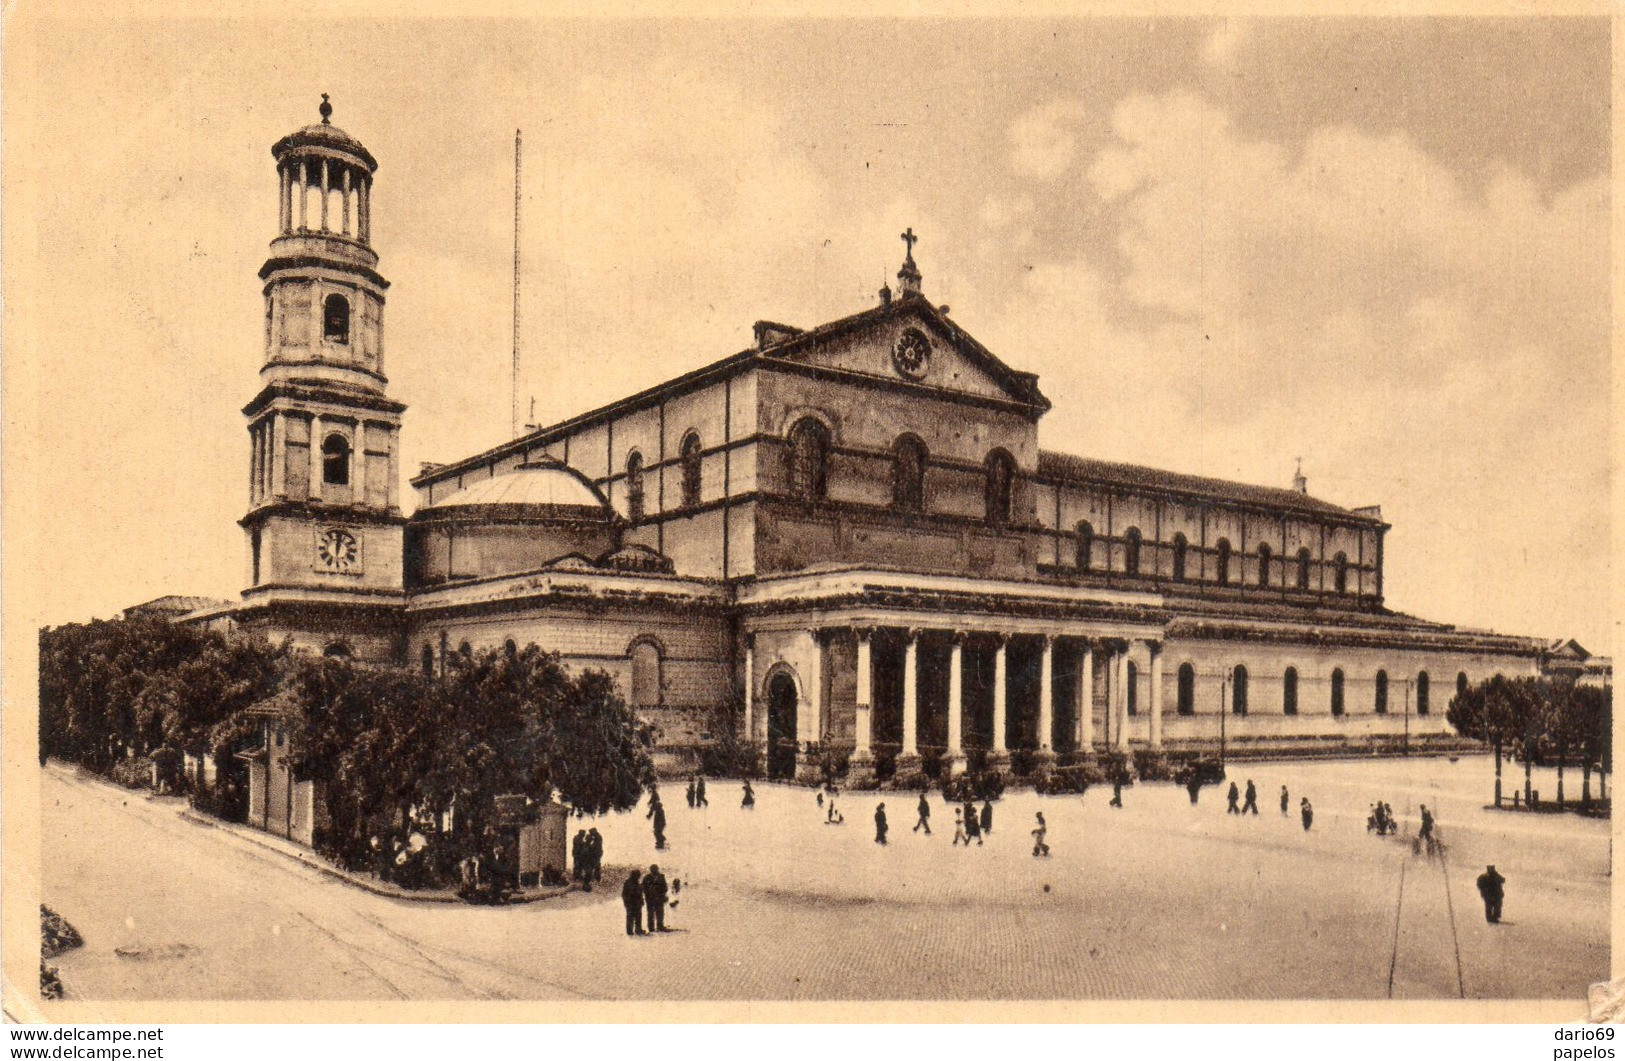 1935 CARTOLINA ROMA - Autres Monuments, édifices